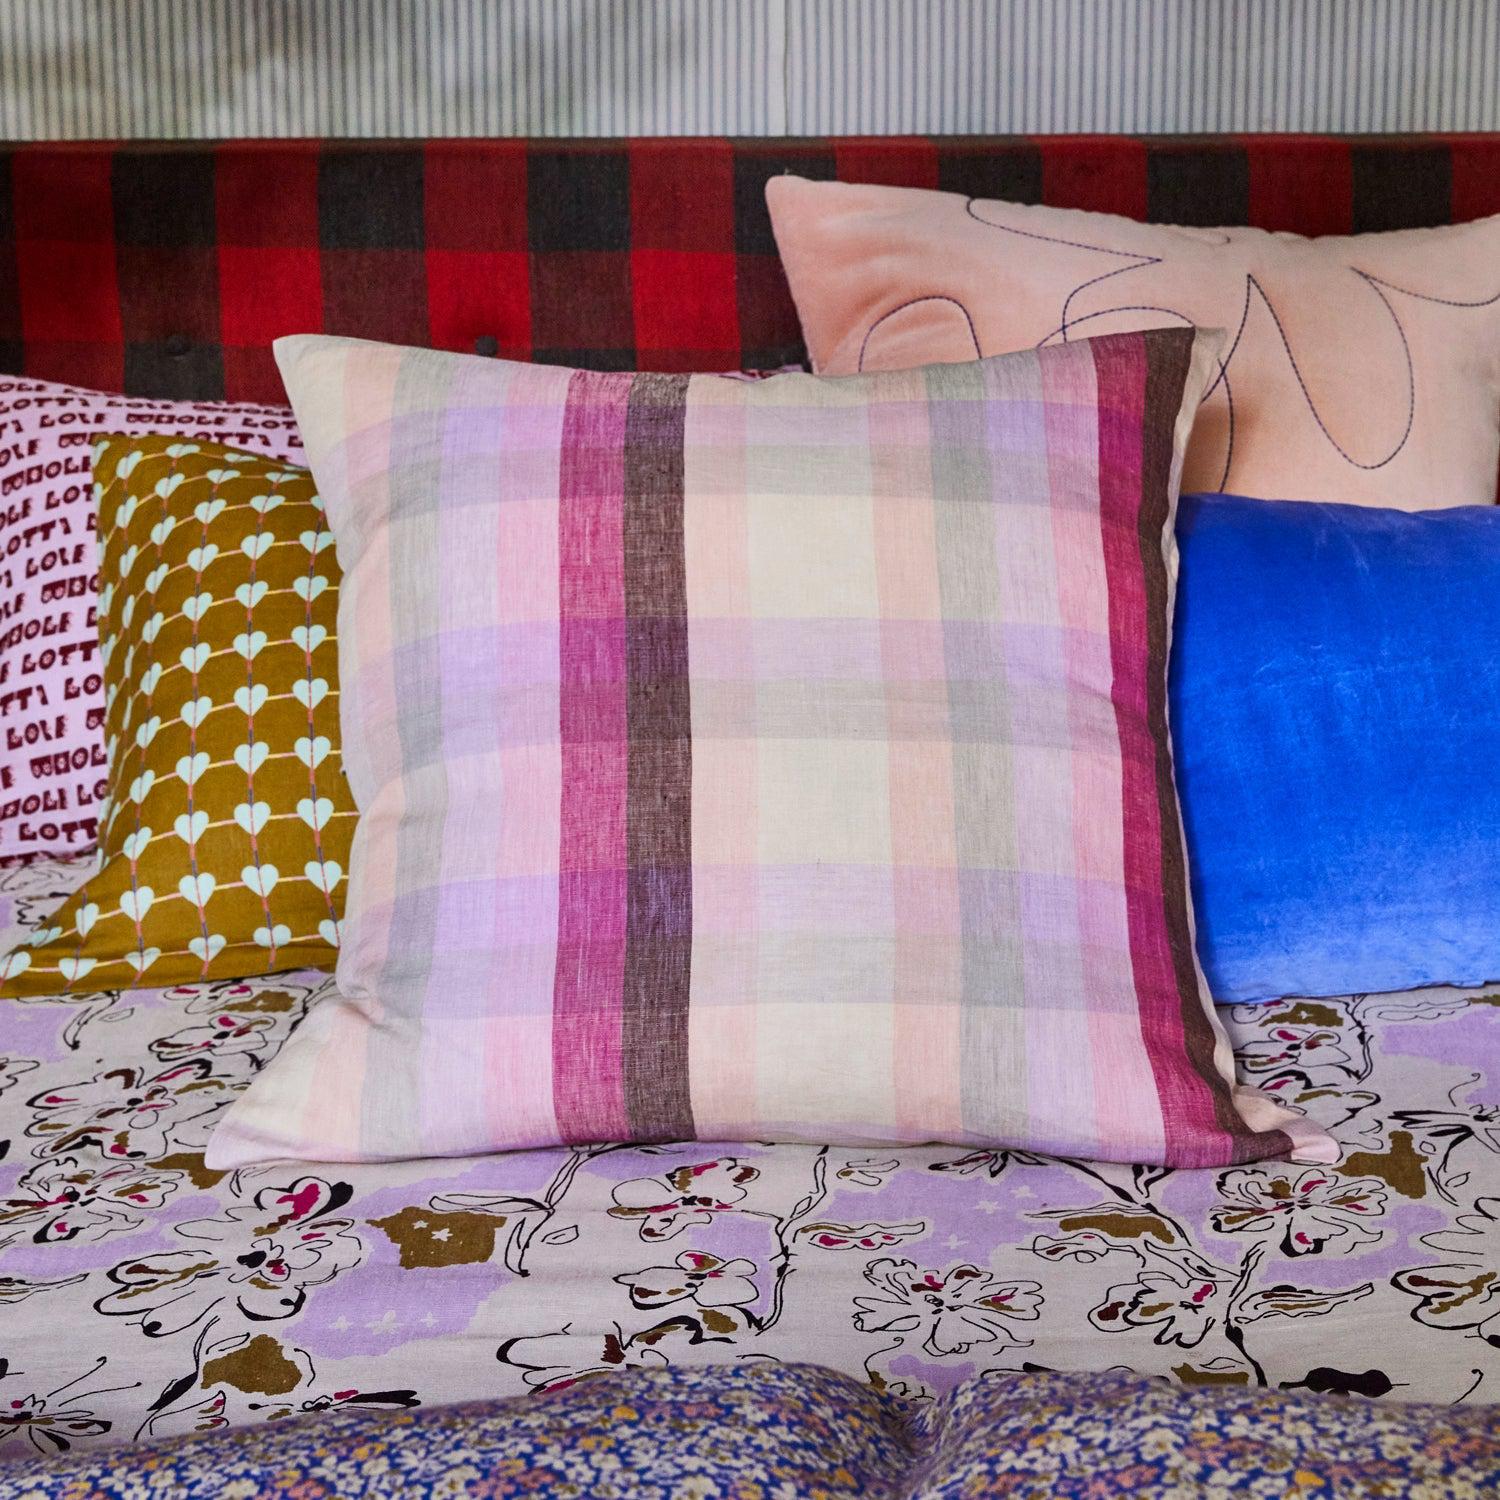 Fifer Linen Euro Pillowcase Set - Flamingo-Soft Furnishings-Sage & Clare-The Bay Room